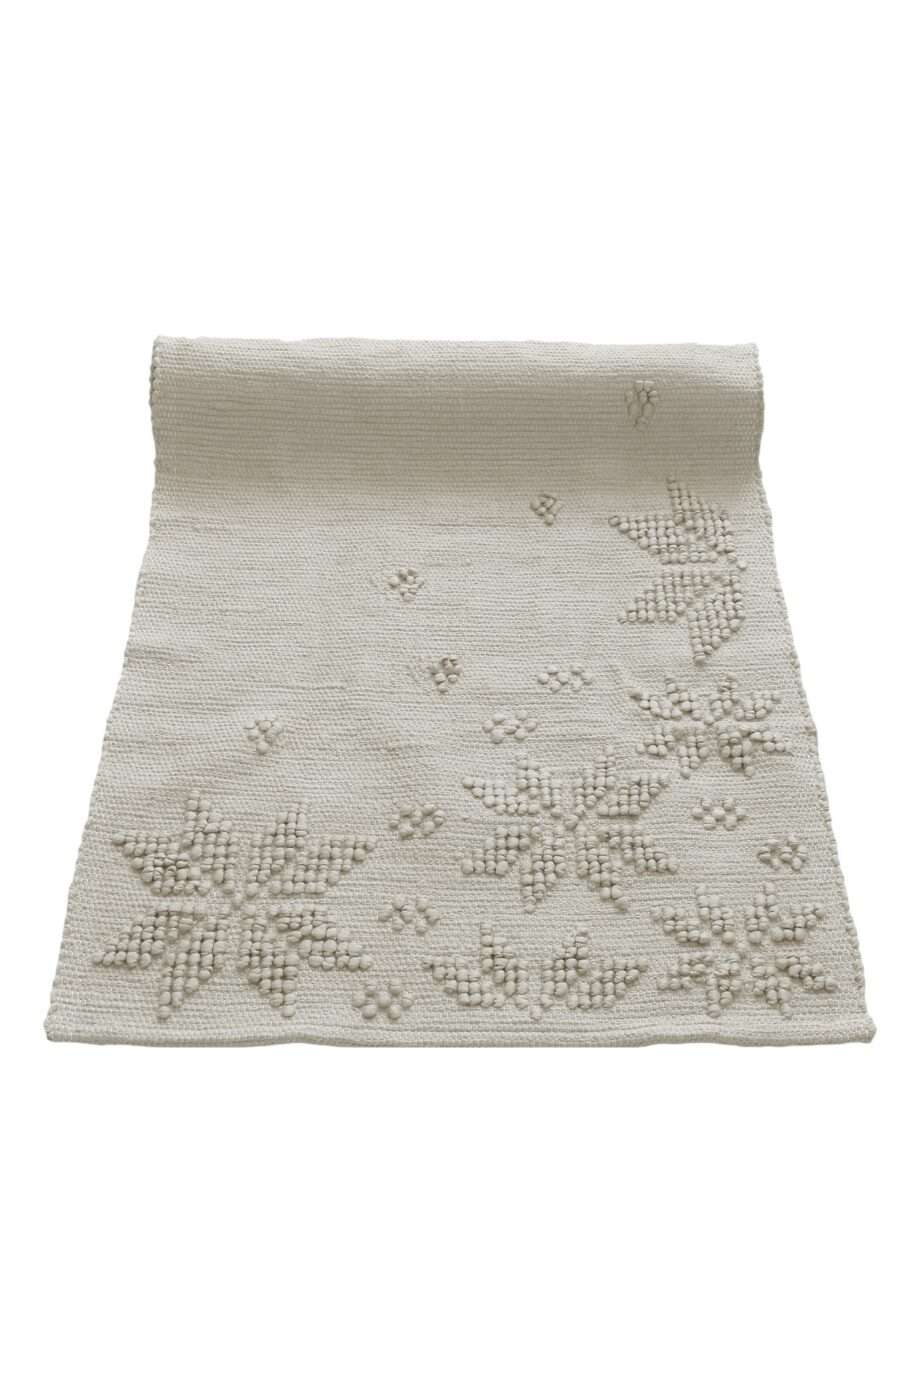 woven cotton floor mat snowflakes linen small